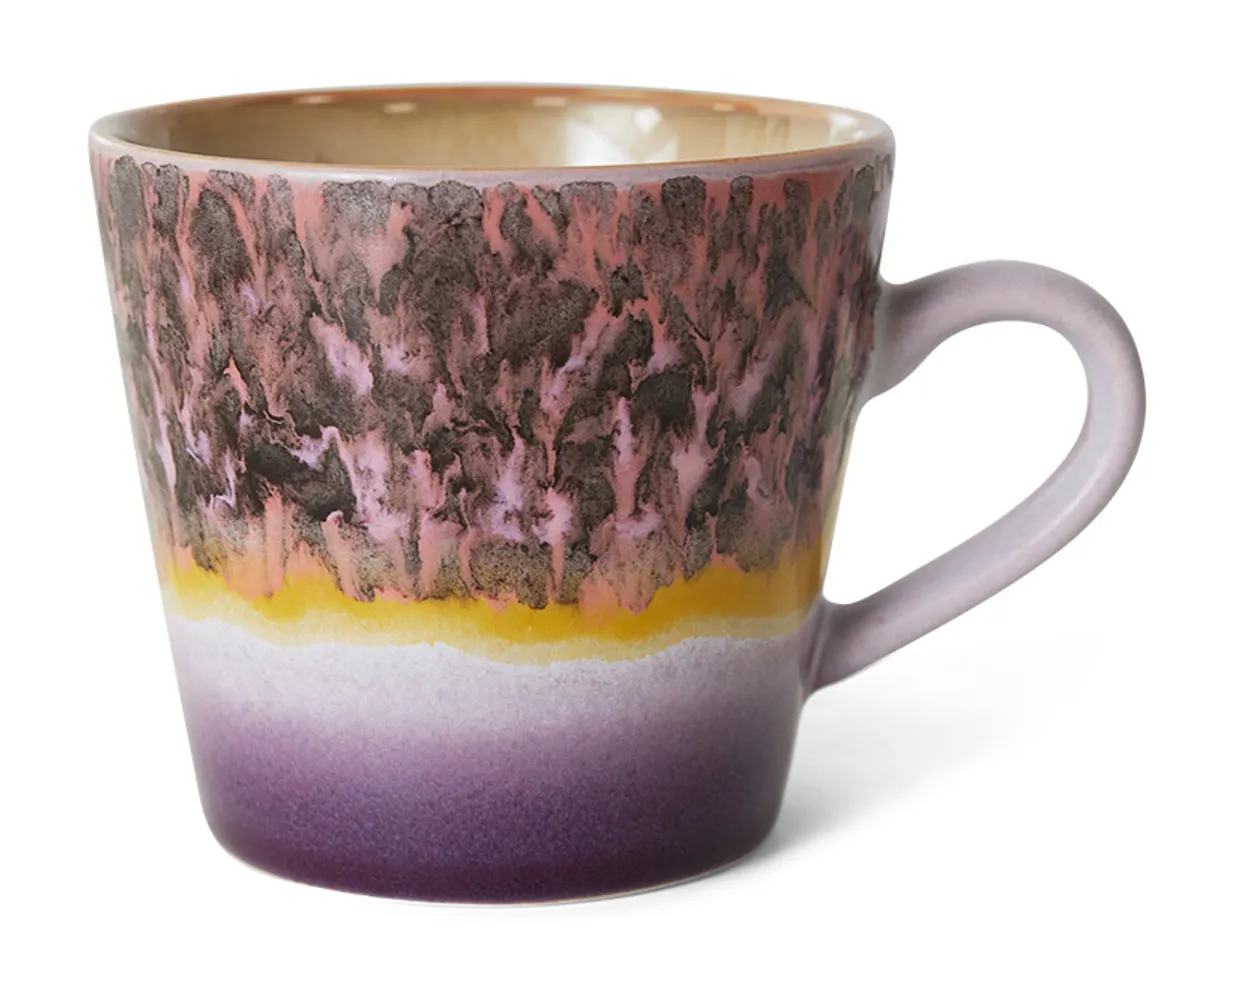 70s ceramics: cappuccino mug, blast